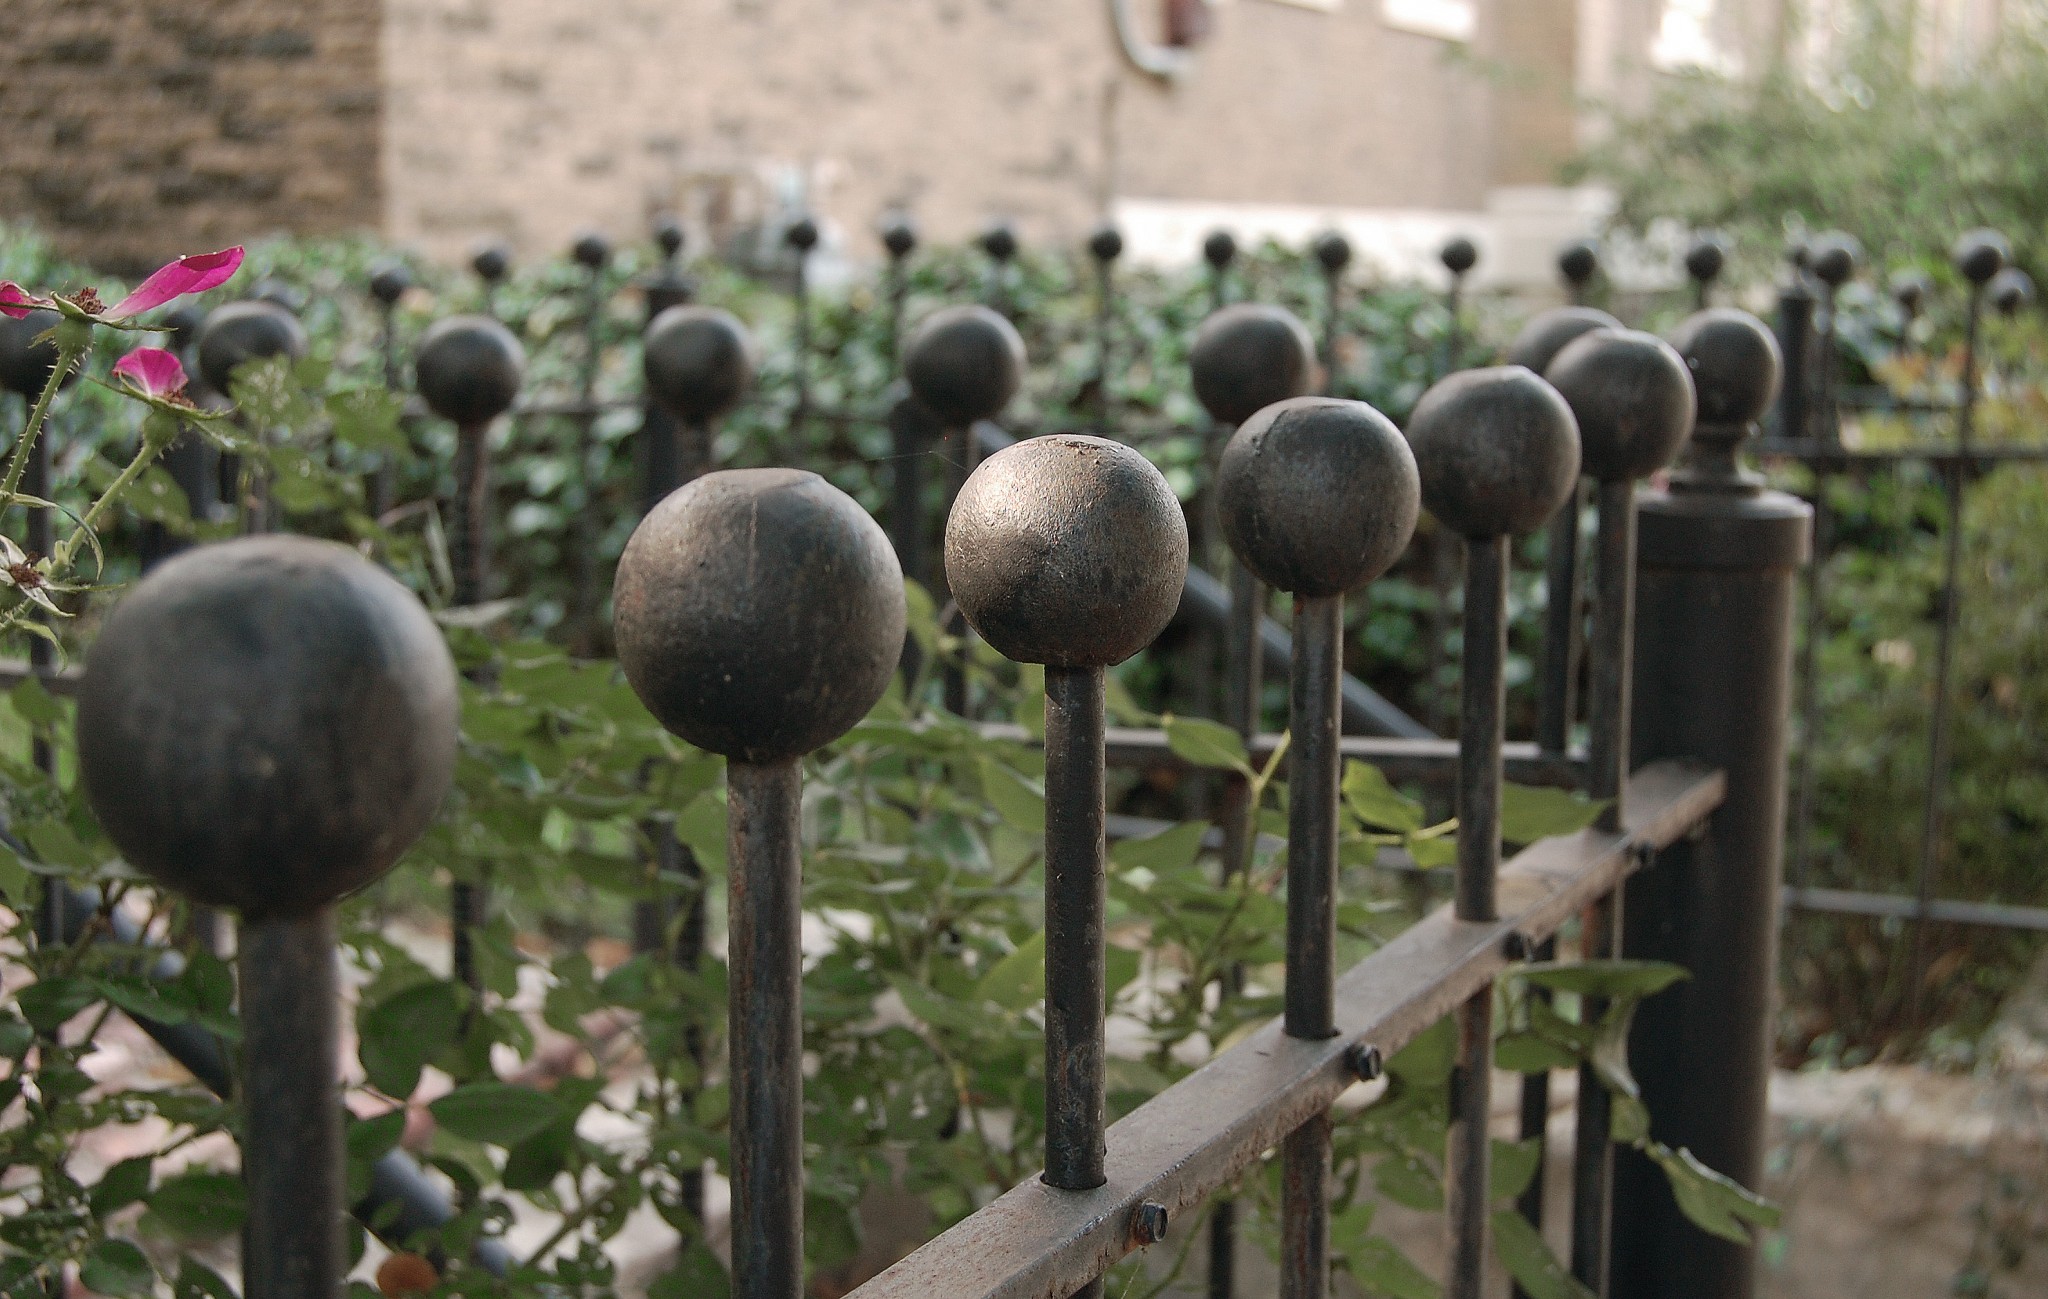  Black Iron fence top balls in receding zig-zag pattern